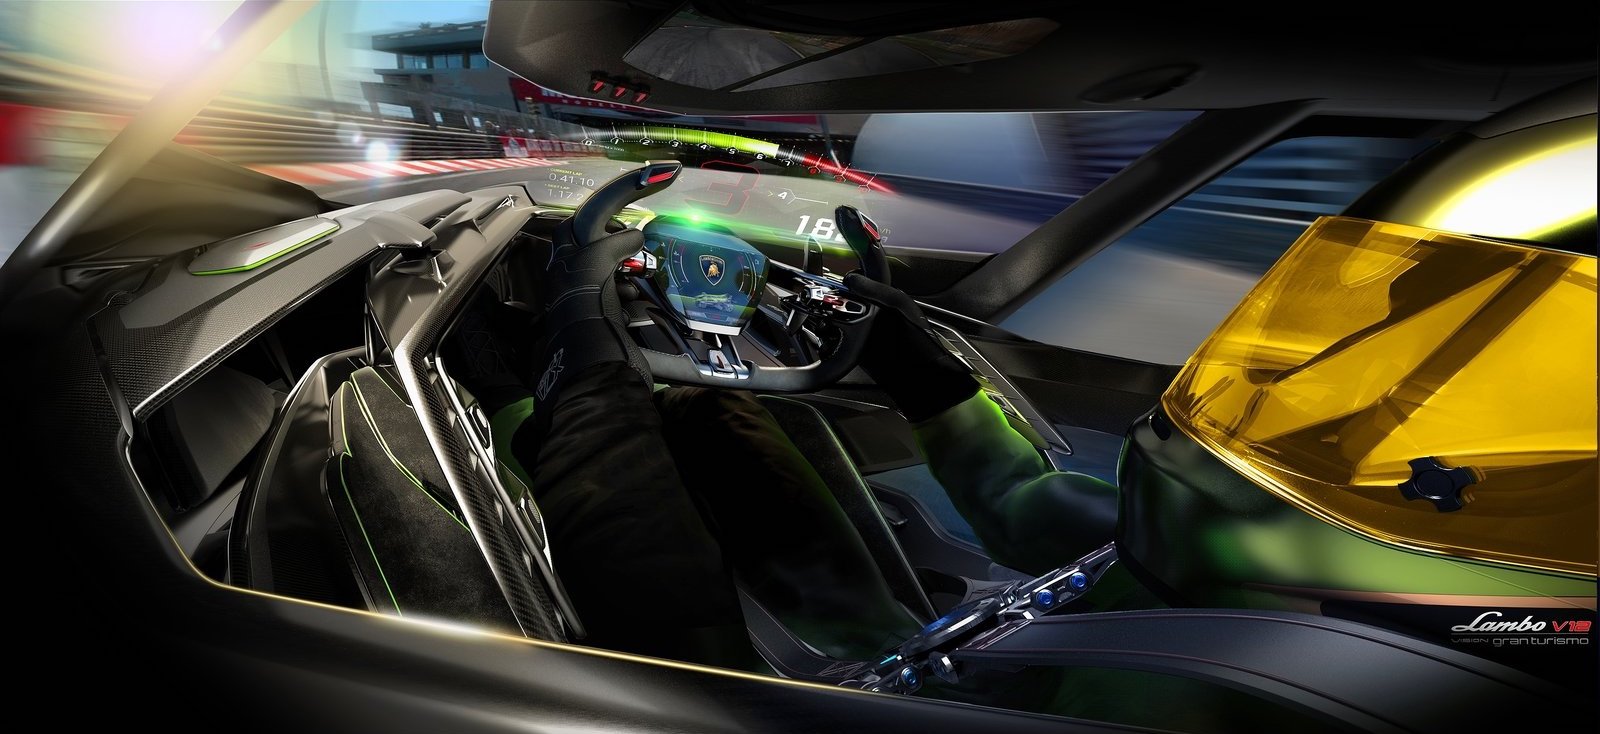 Spectacular Lamborghini V12 Vision GT concept revealed ...